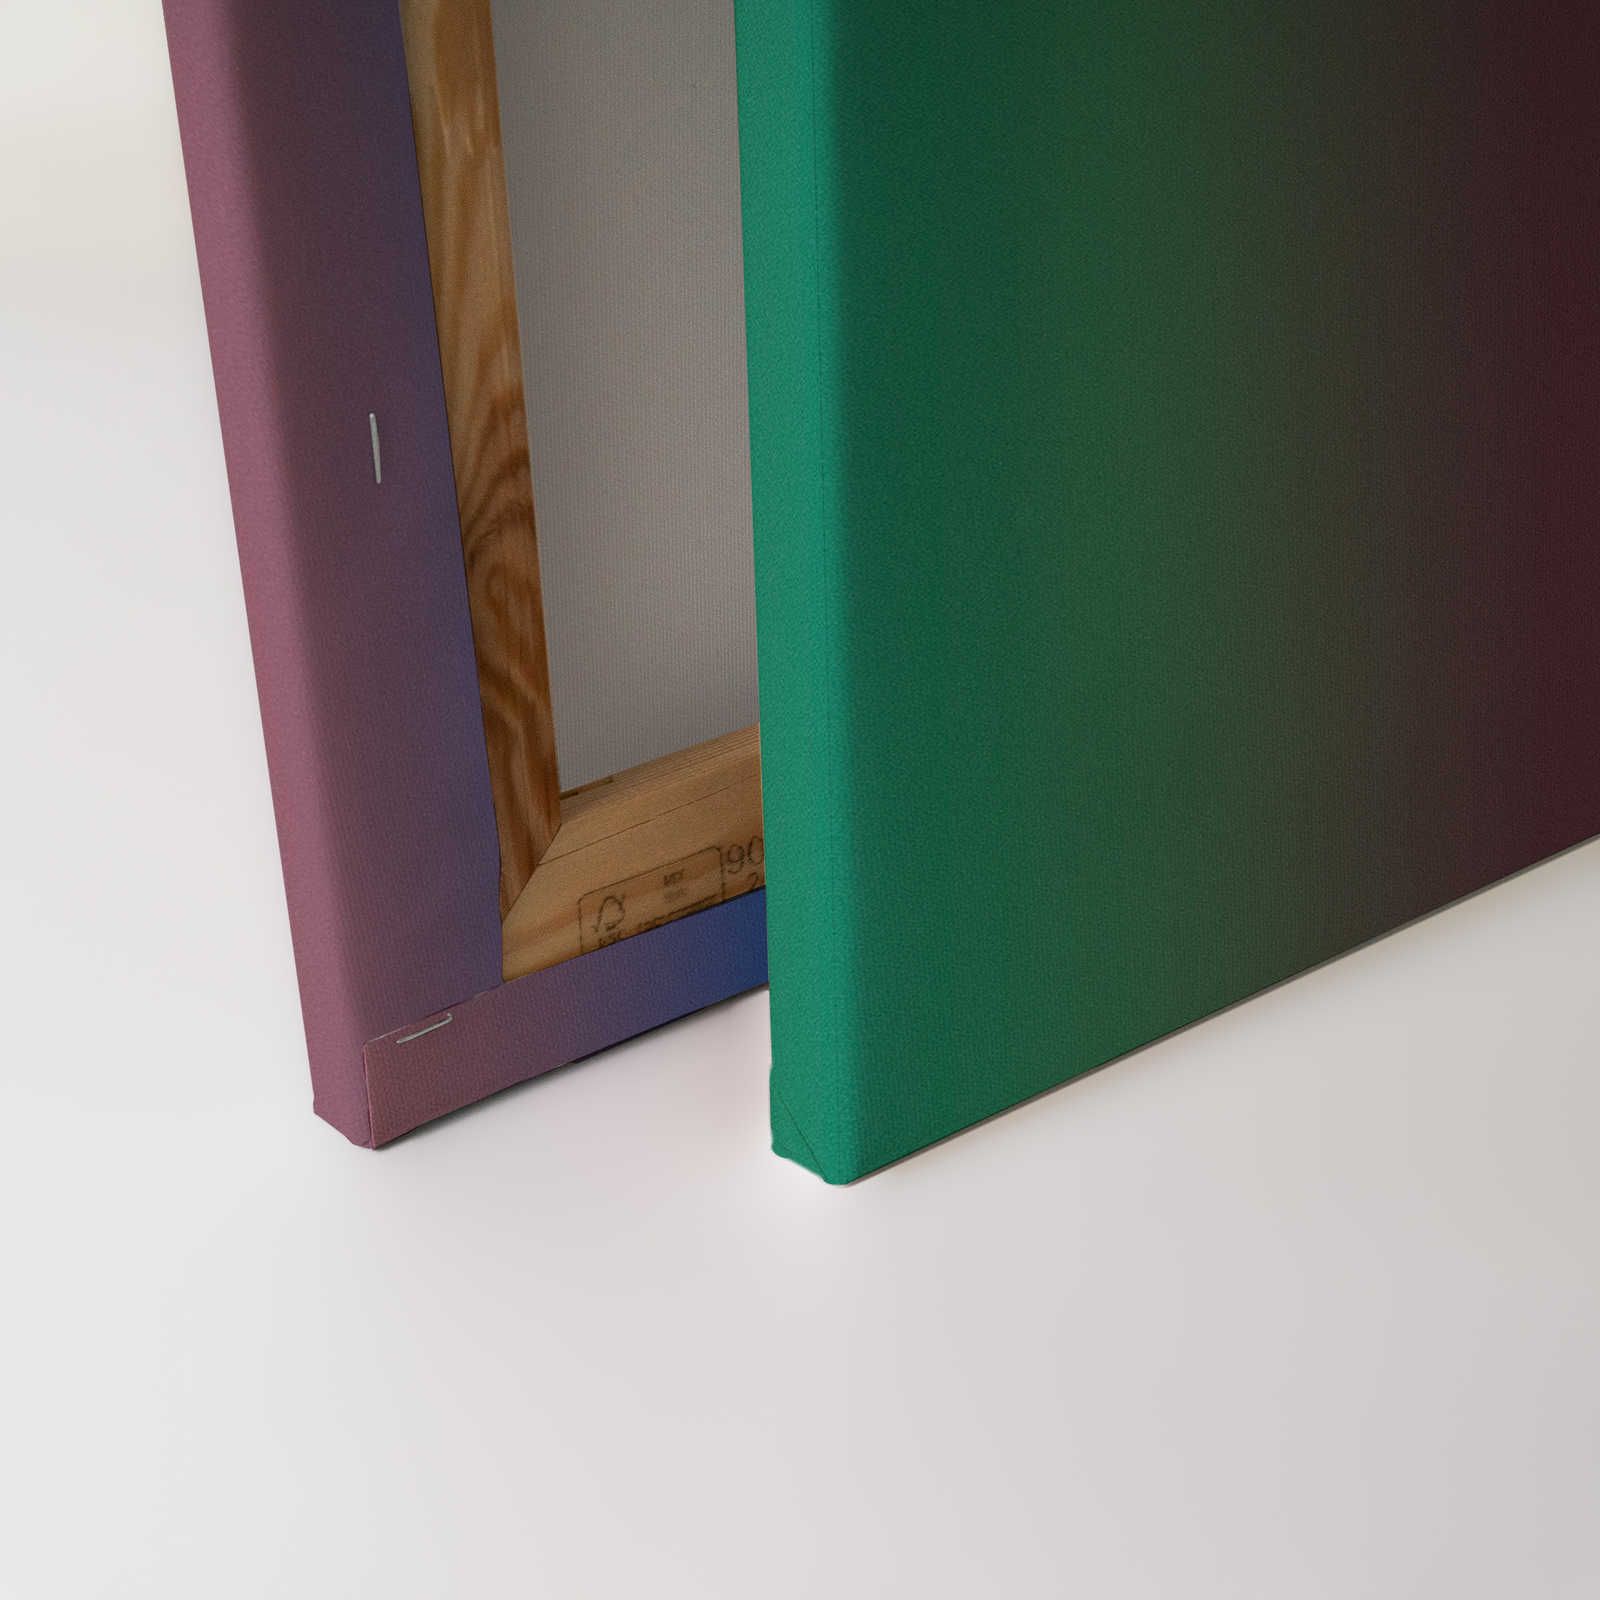             Over the Rainbow 2 - Lienzo degradado Diseño de rayas de colores - 0,90 m x 0,60 m
        